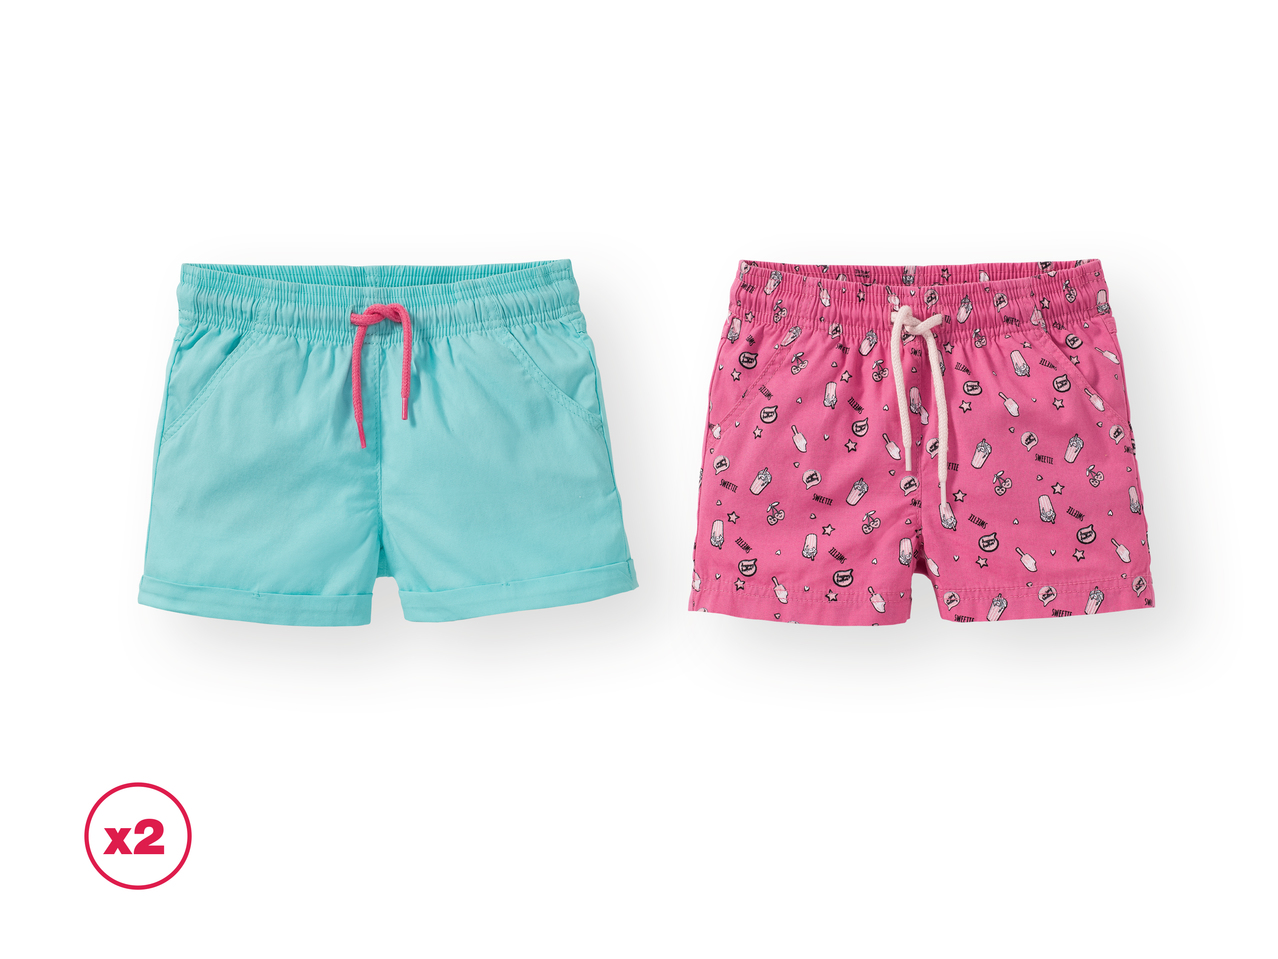 'Lupilu(R)' Pantalones cortos niños colores pastel pack 2 100% algodón